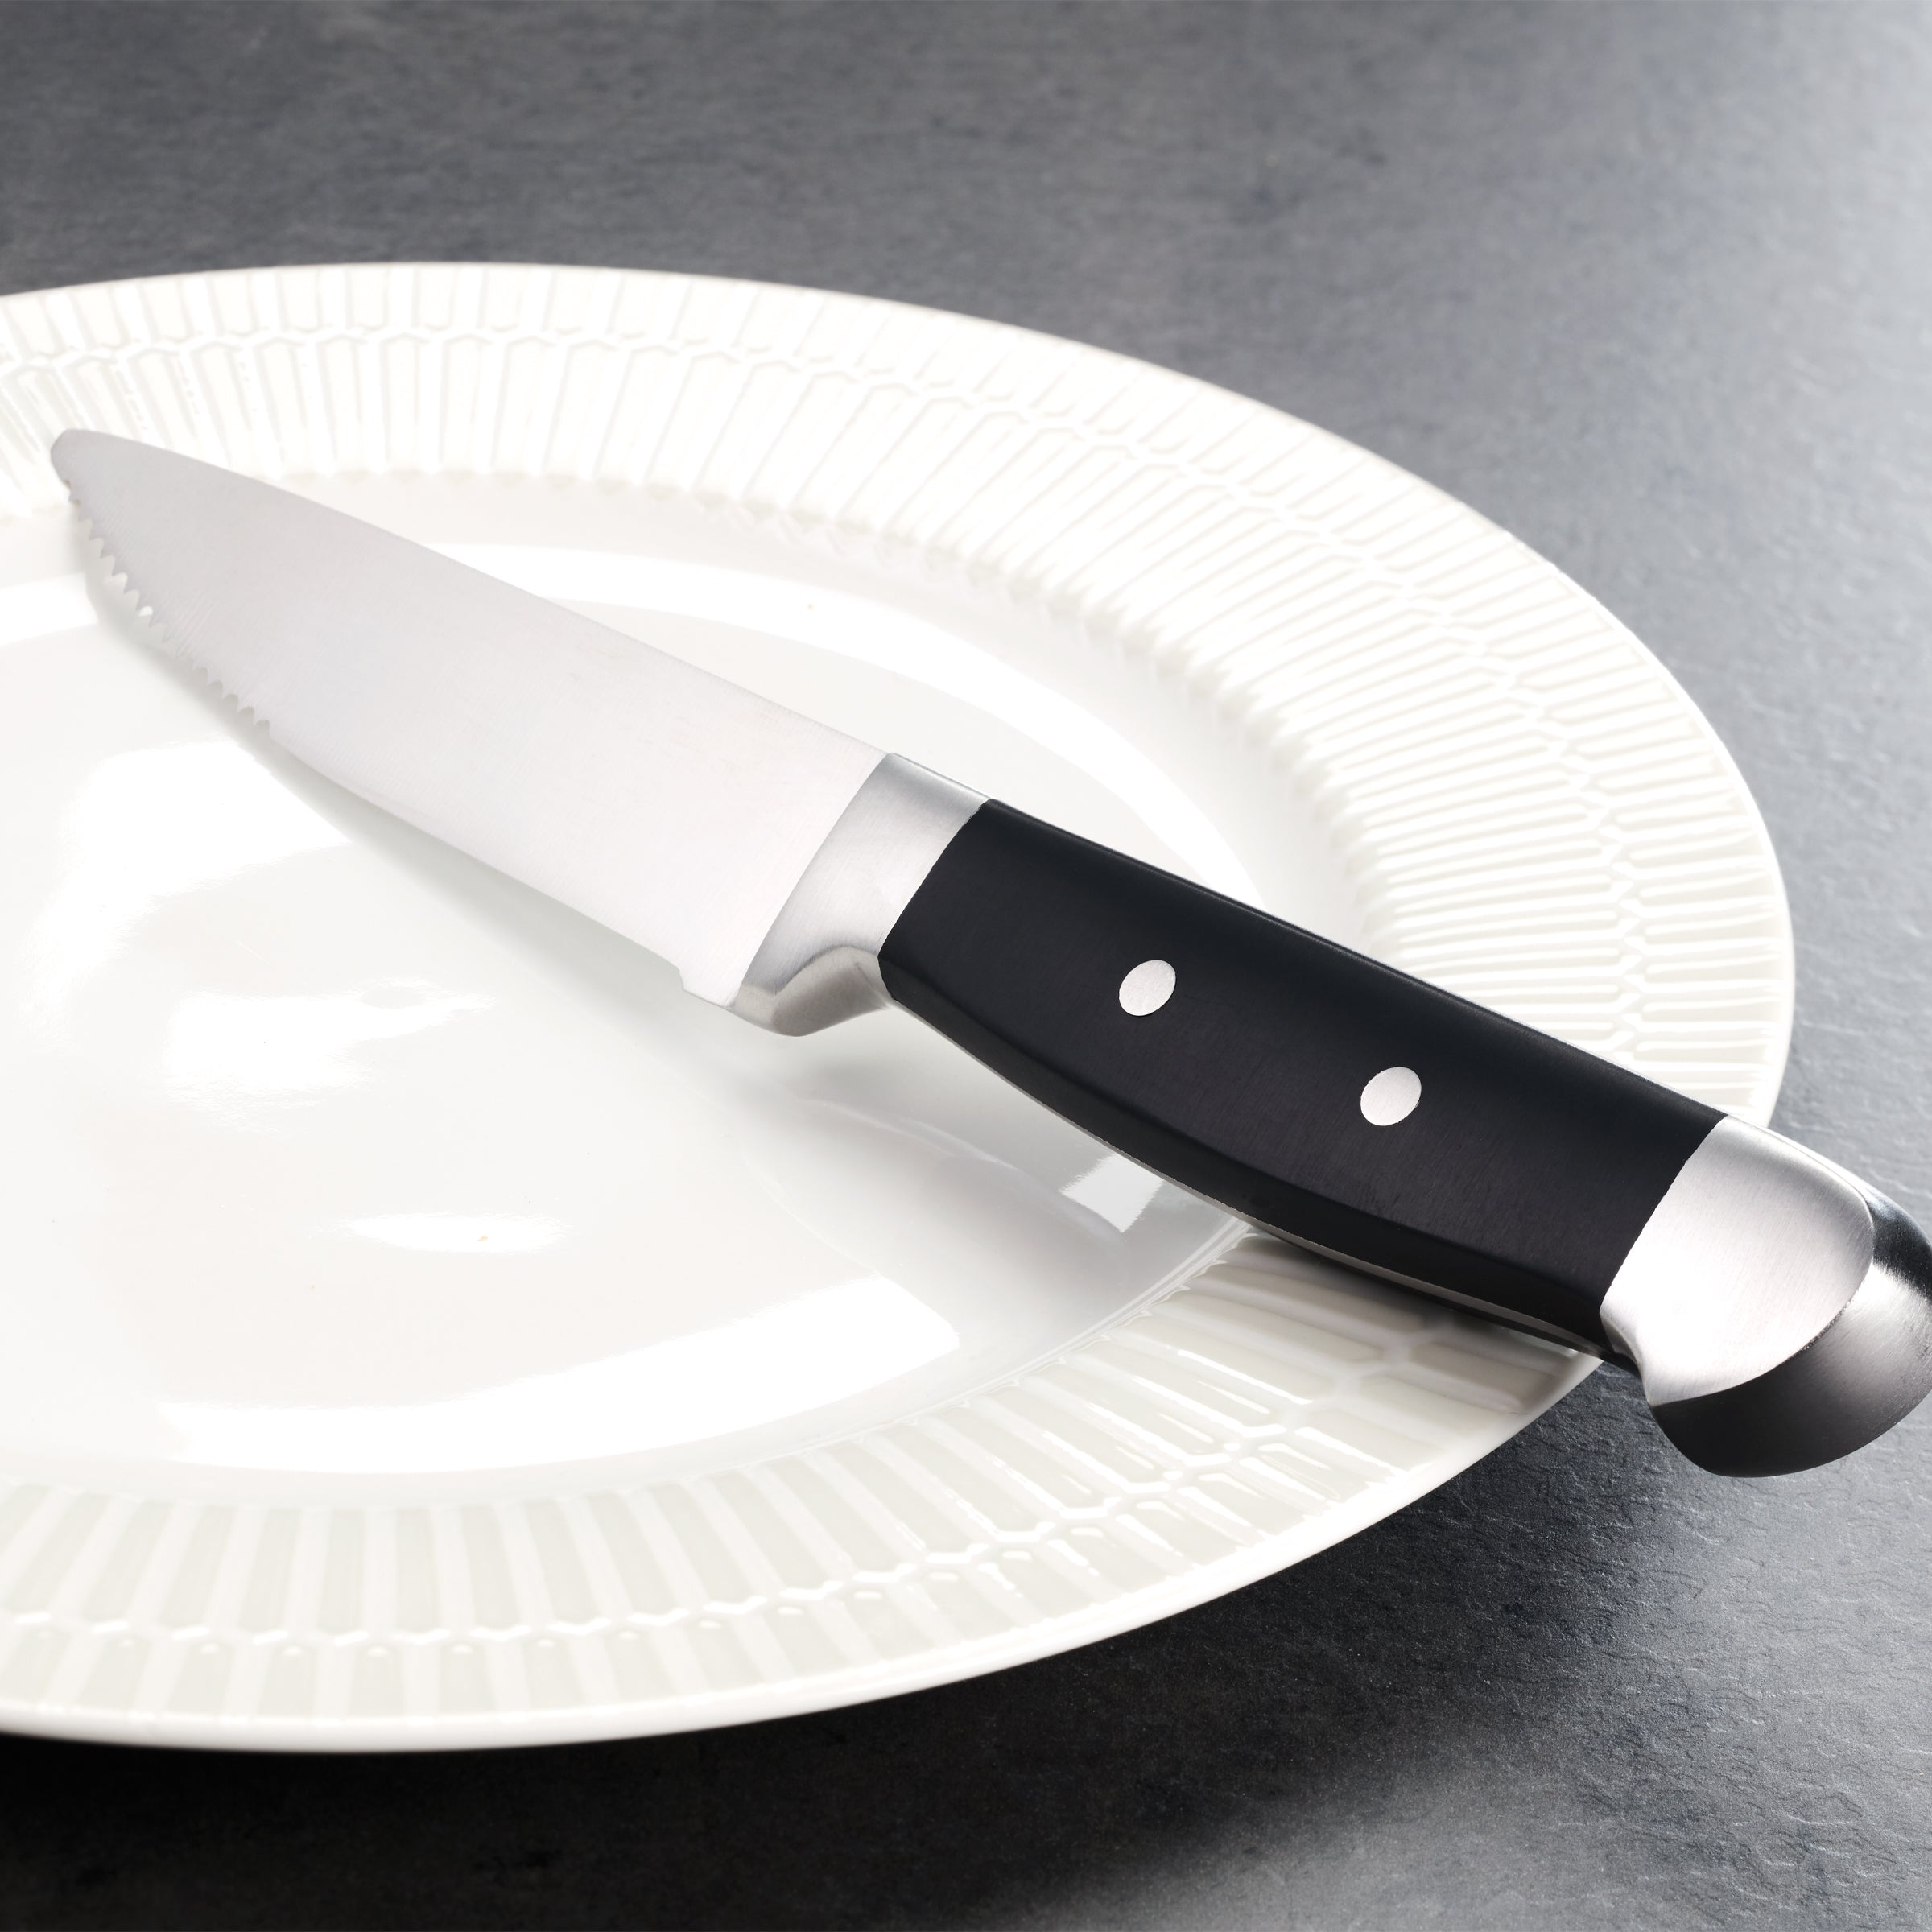 ONEIDA CERAMIC KITCHEN KNIFE 4-1/2” BLADE SHARP